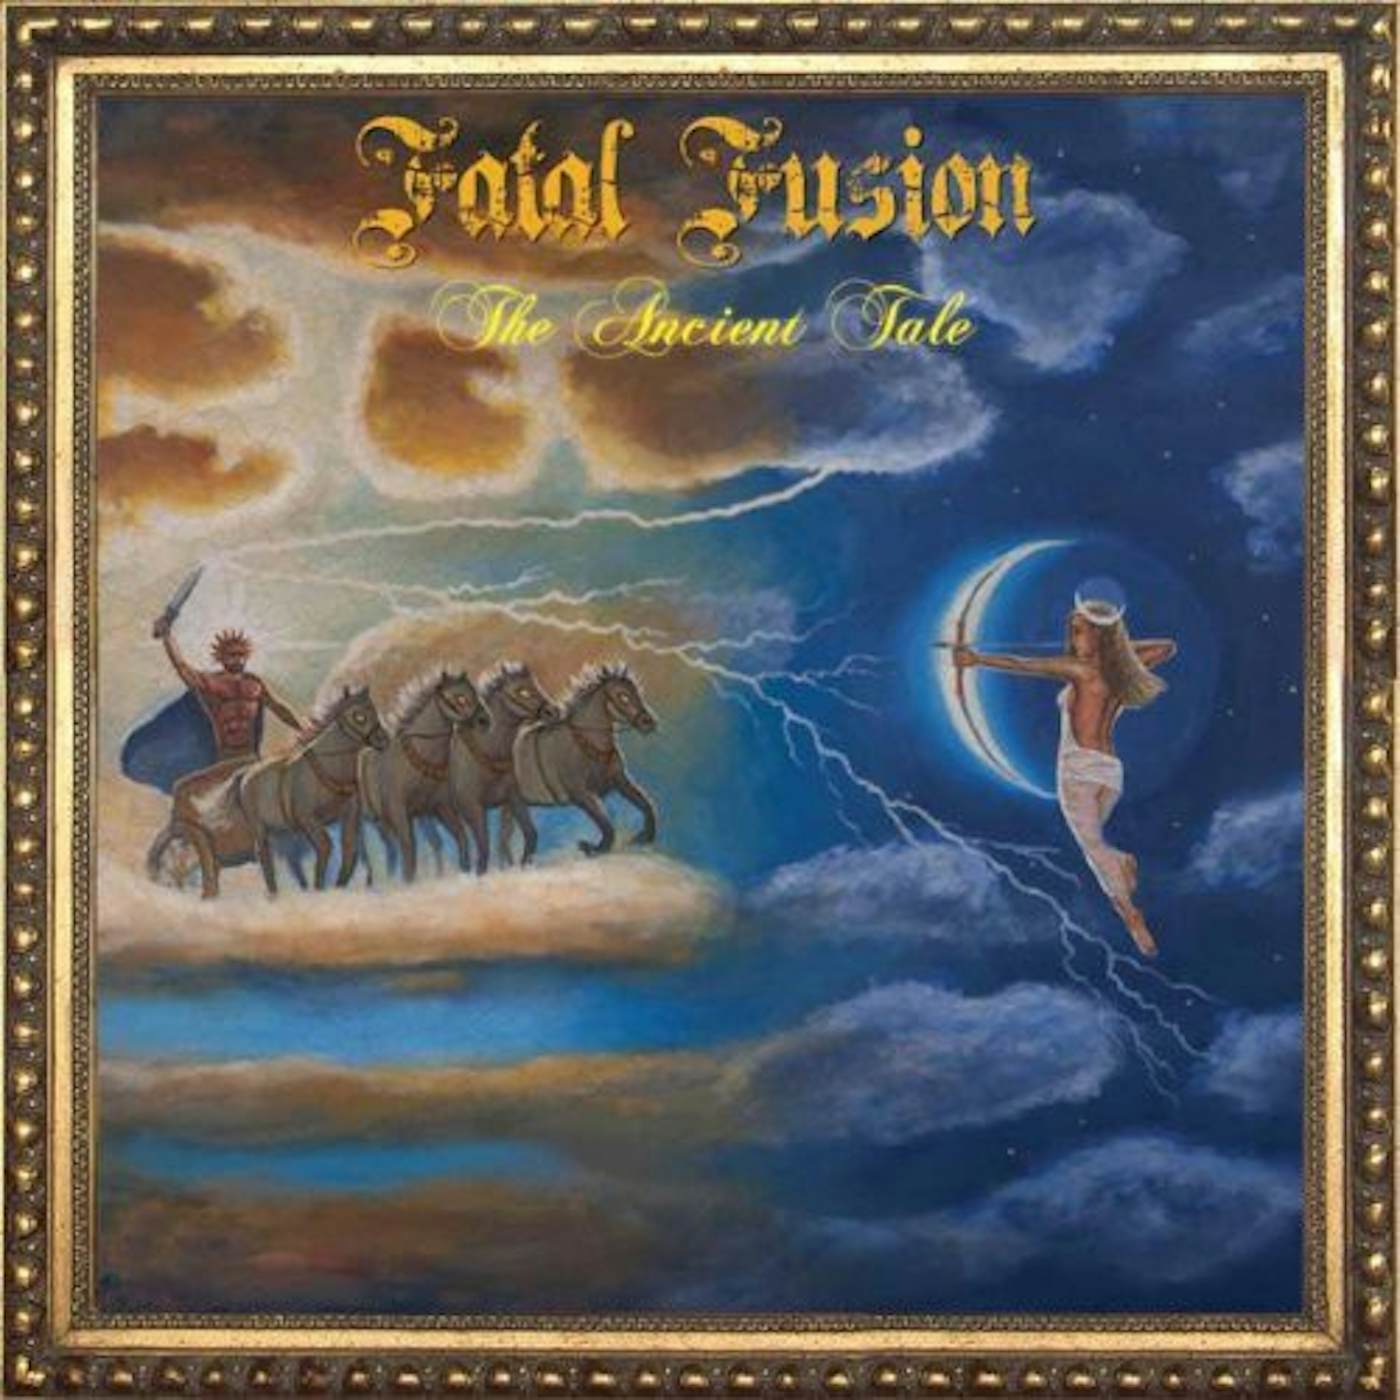 Fatal Fusion ANCIENT TALE CD